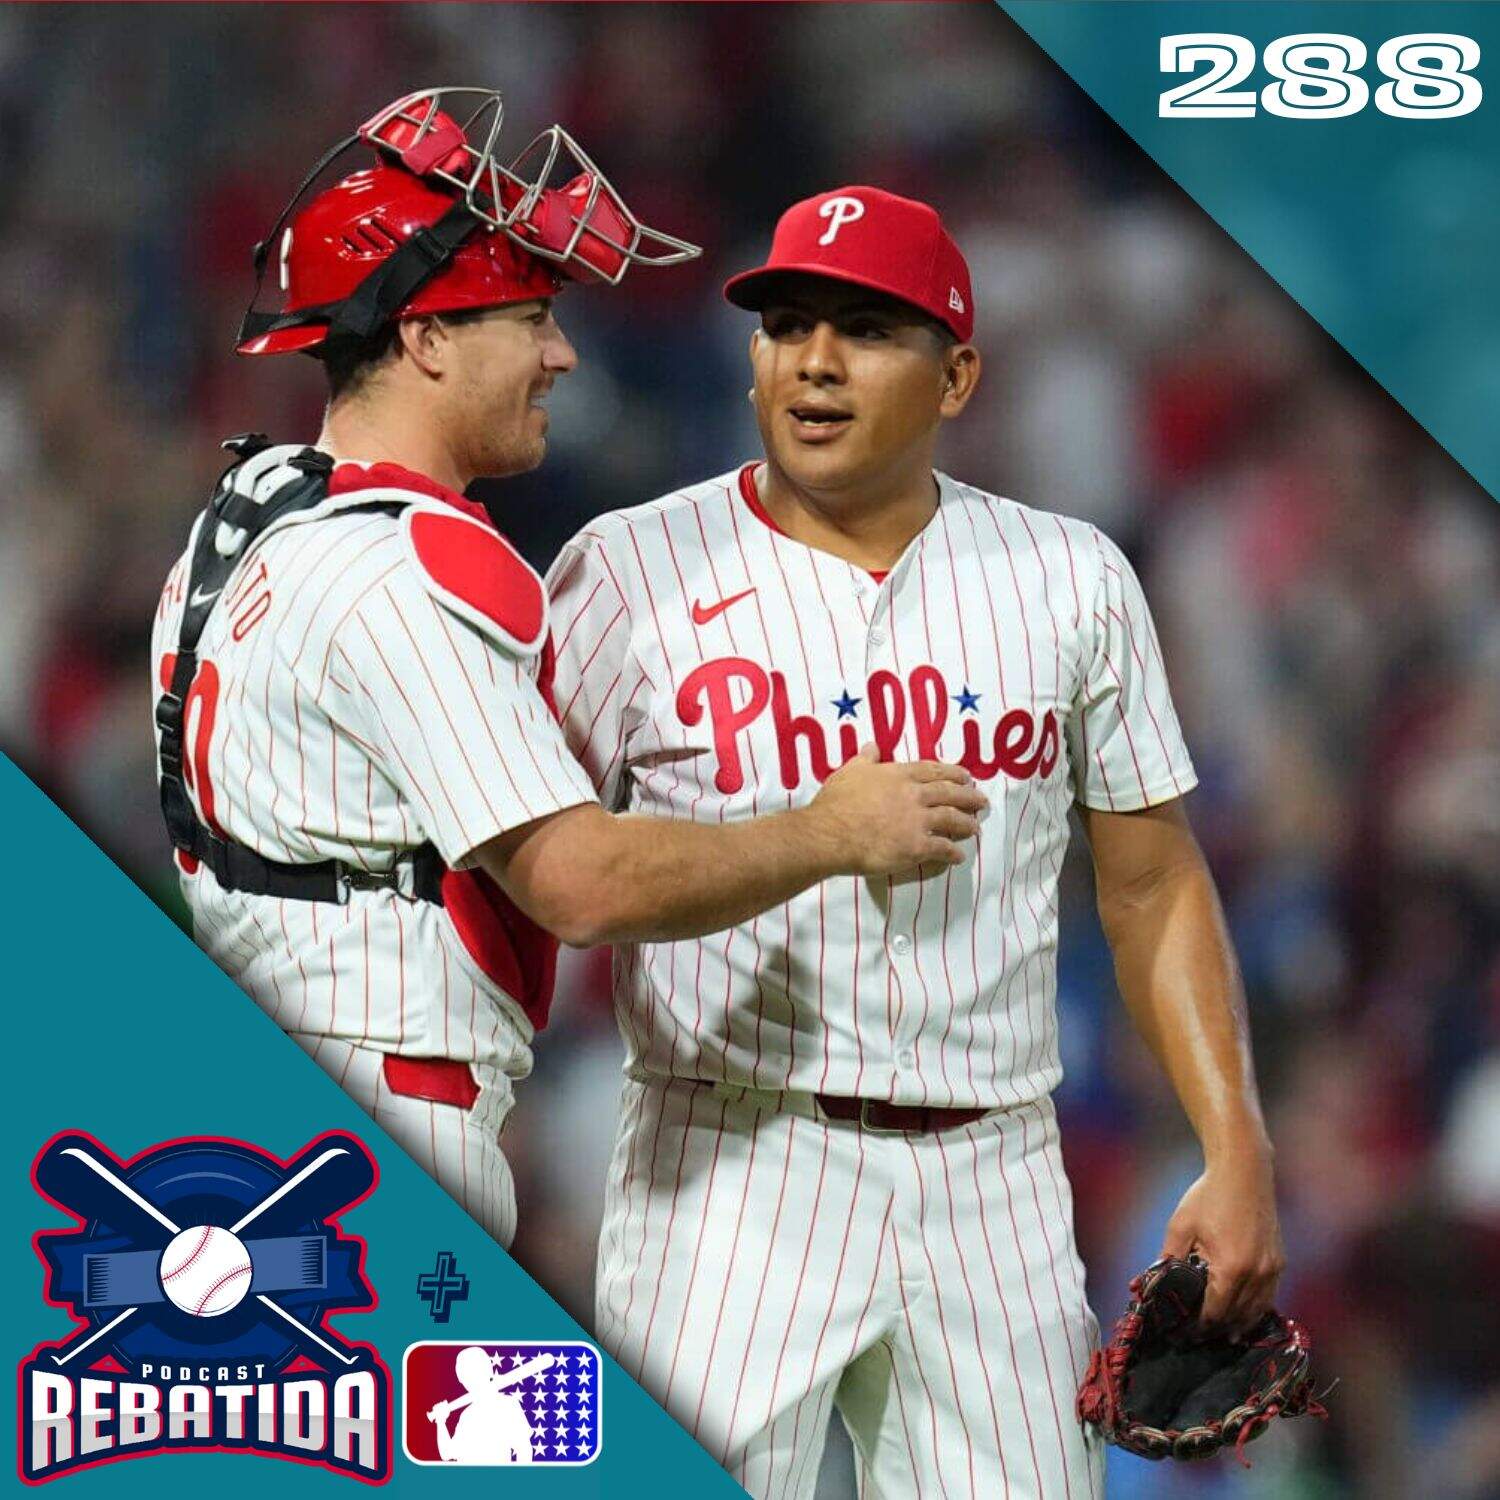 Rebatida Podcast 288 – MLB POWER RANKING DE ABRIL